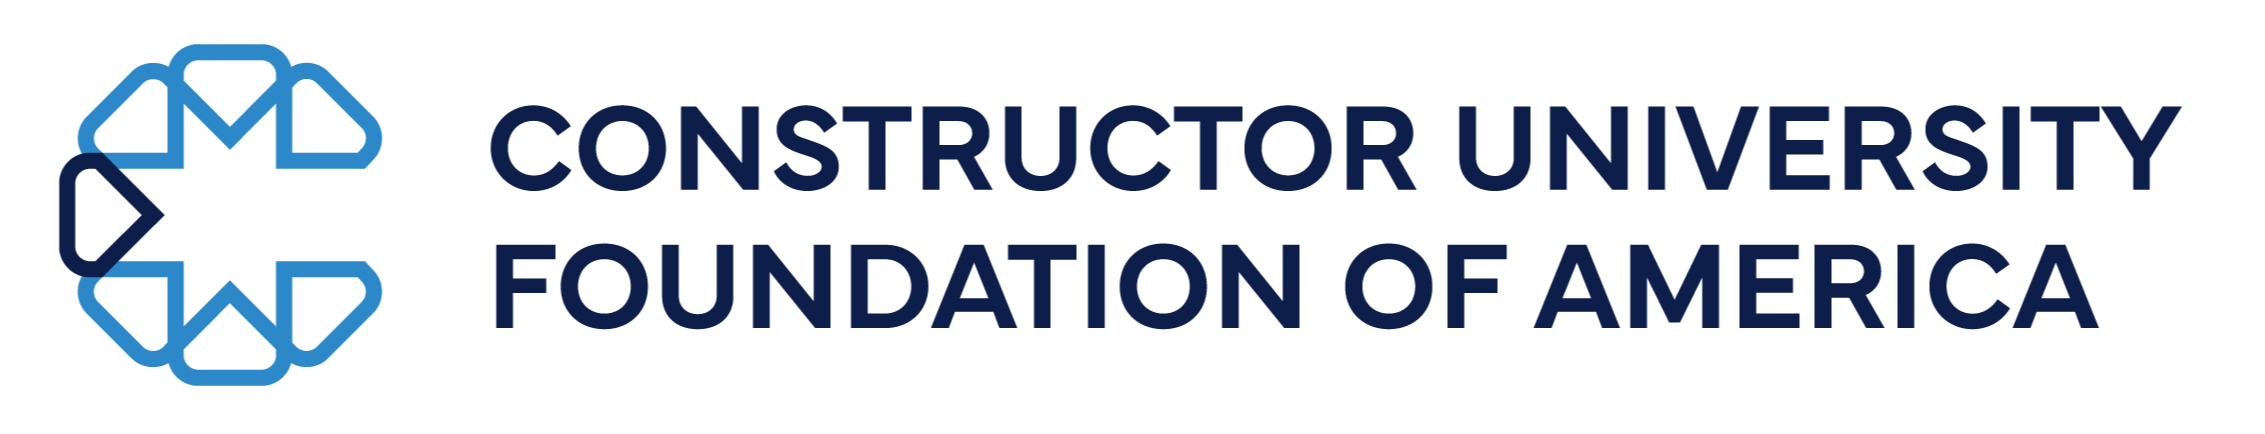 Constructor University Foundation of America logo